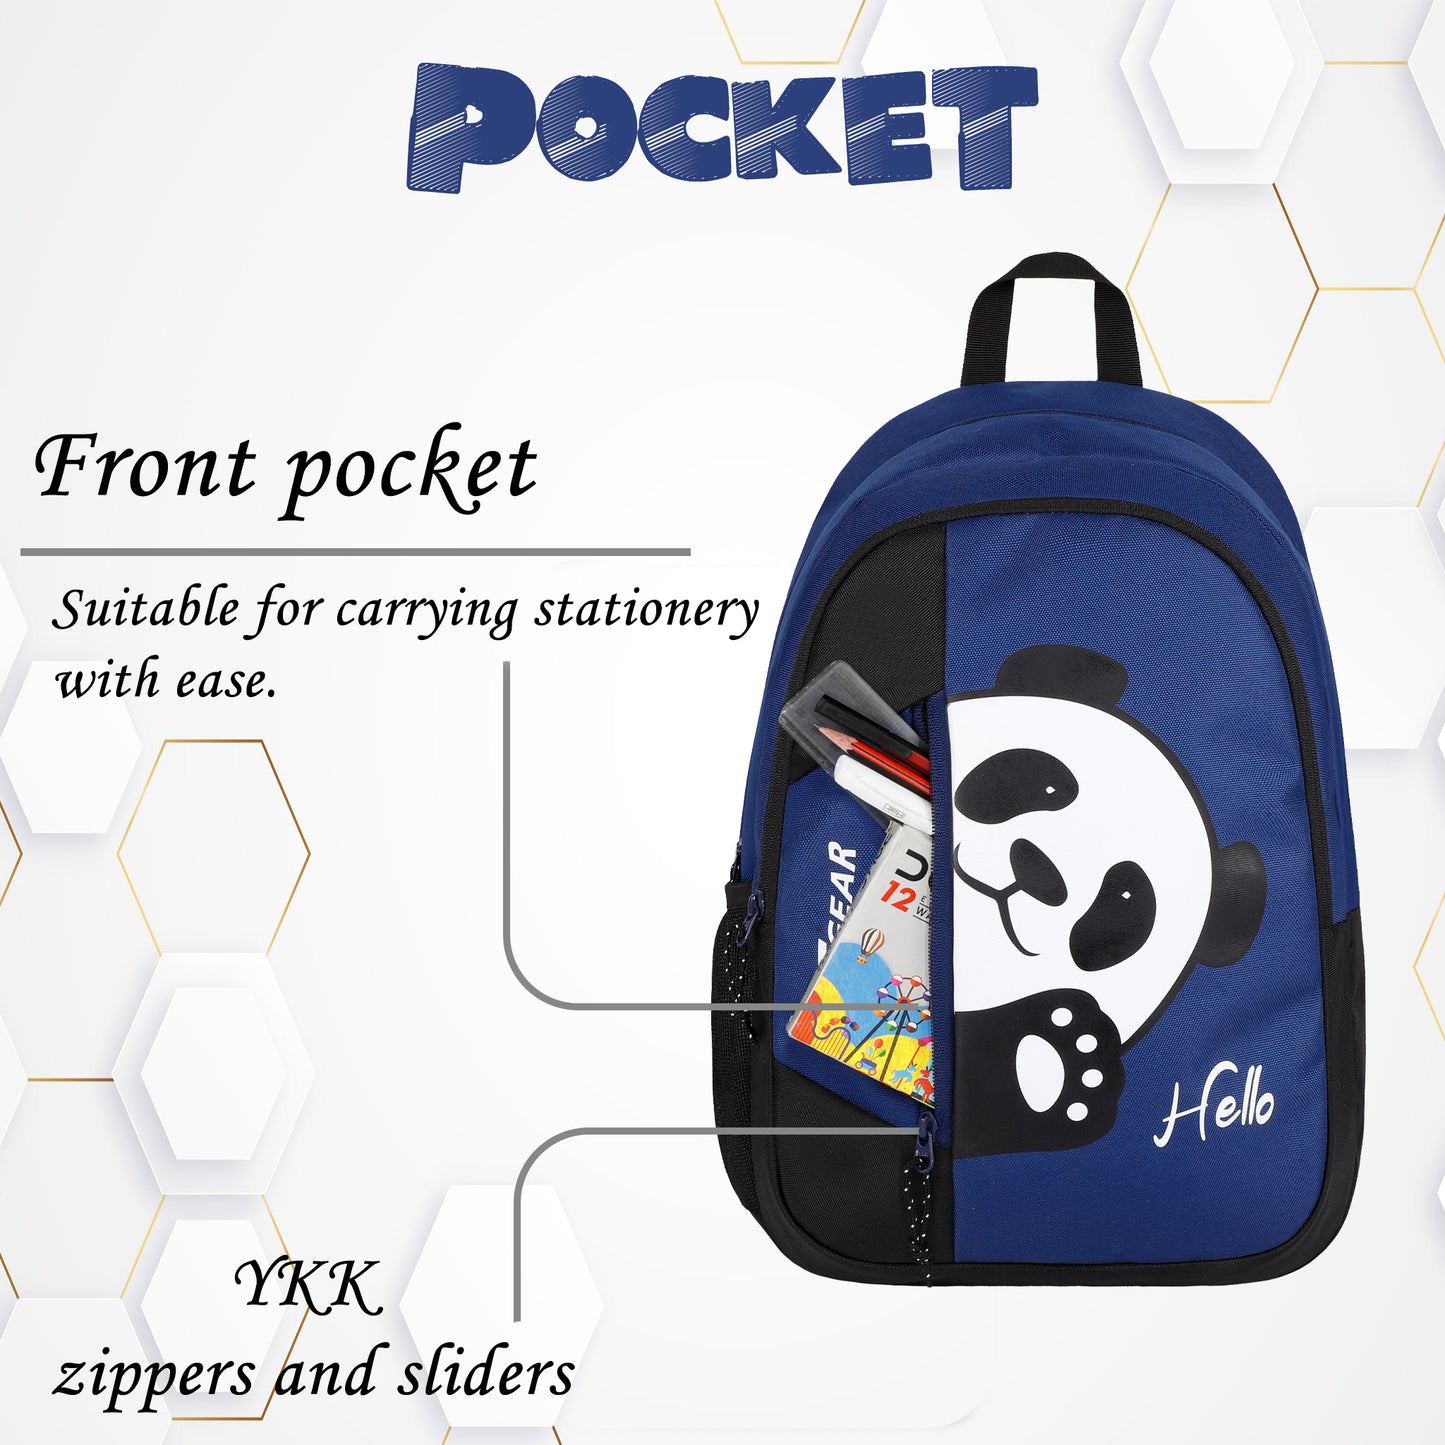 Panda 21L Navy Backpack